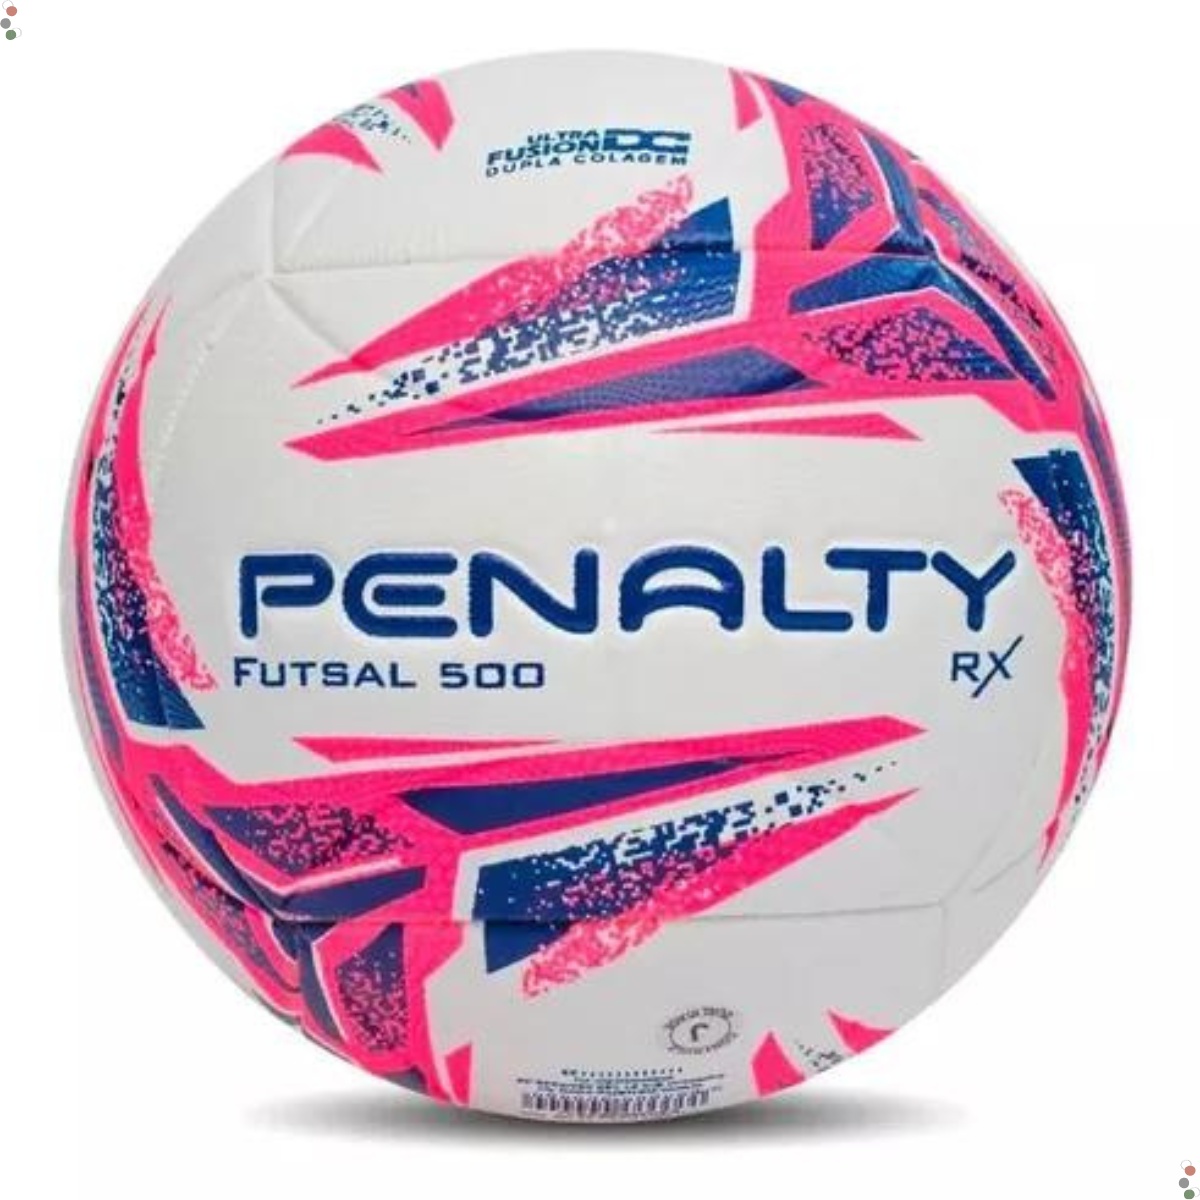 Bola Futsal Penalty Rx 500 Xxiii - Bc/Am/Pt e Bc/Rs/Az